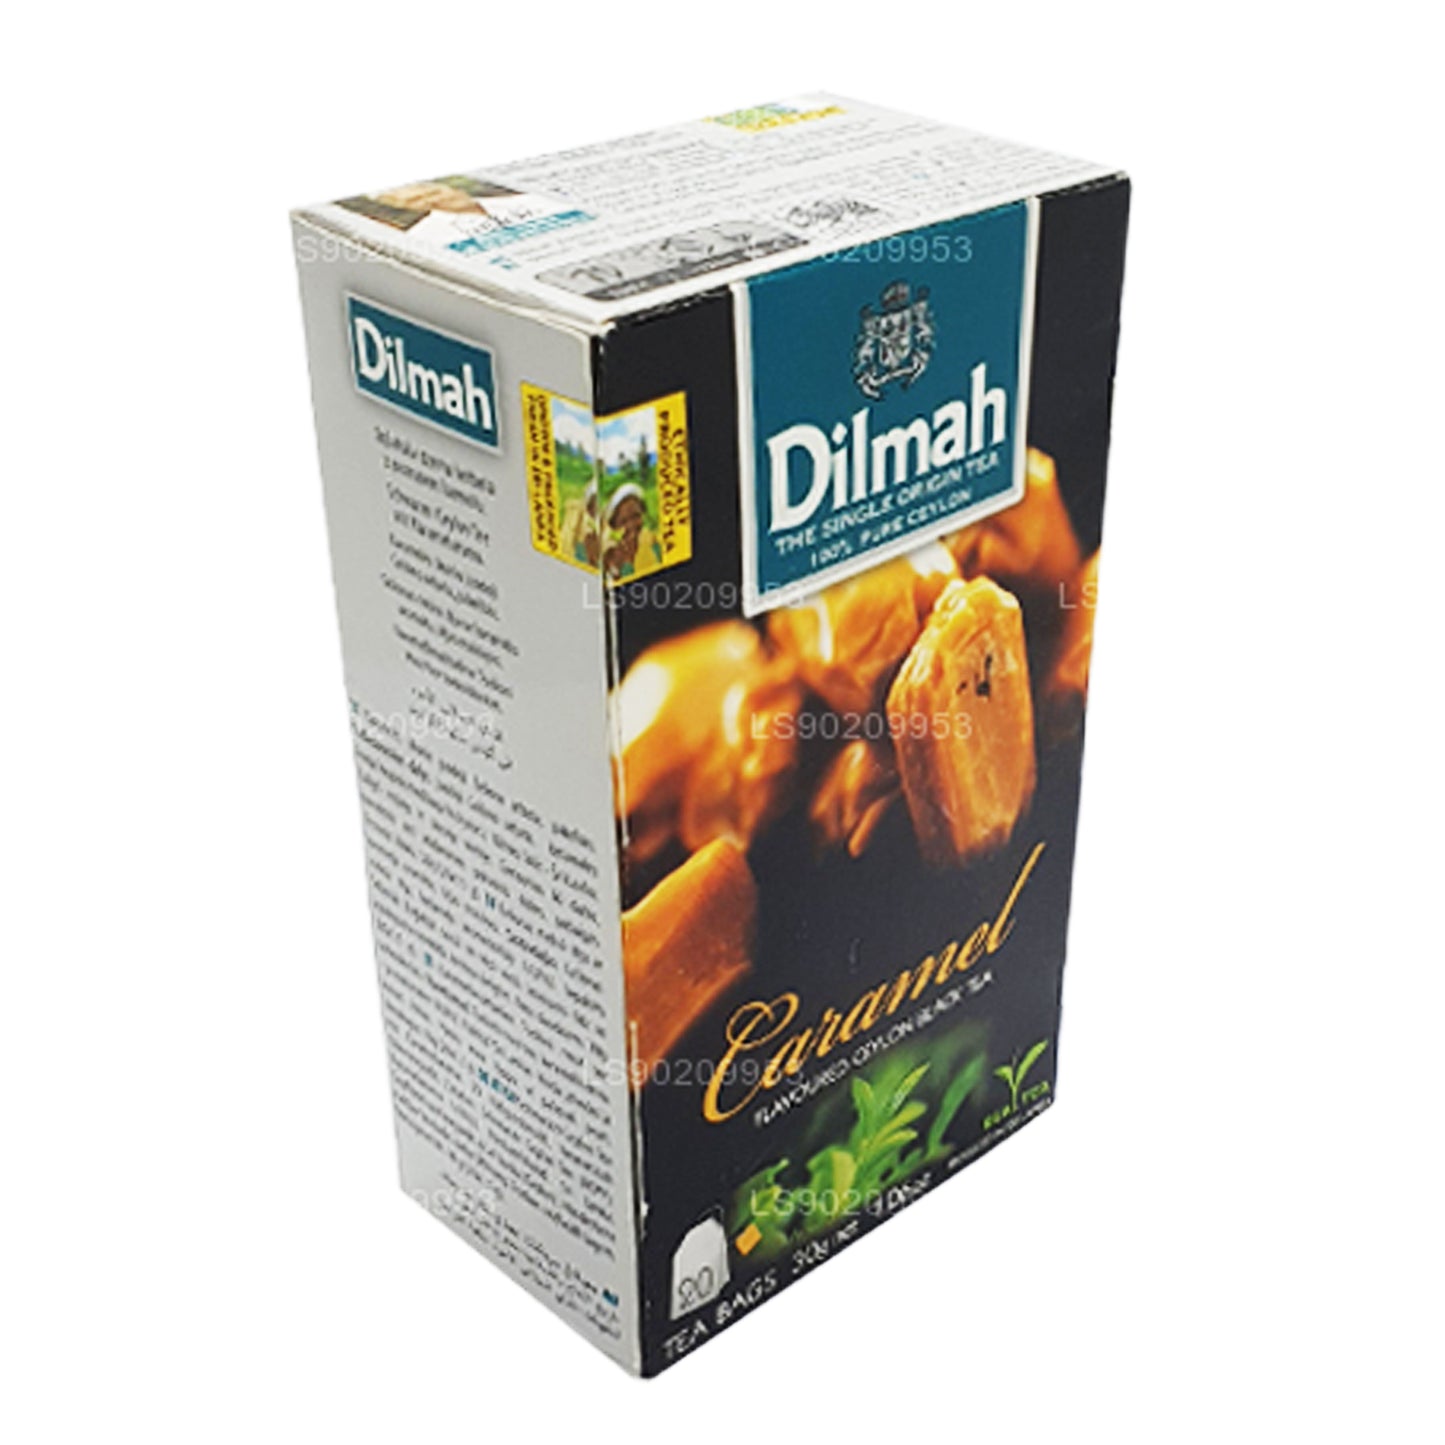 Dilmah Karamel Aromalı Çay (40g) 20 Çay Poşeti